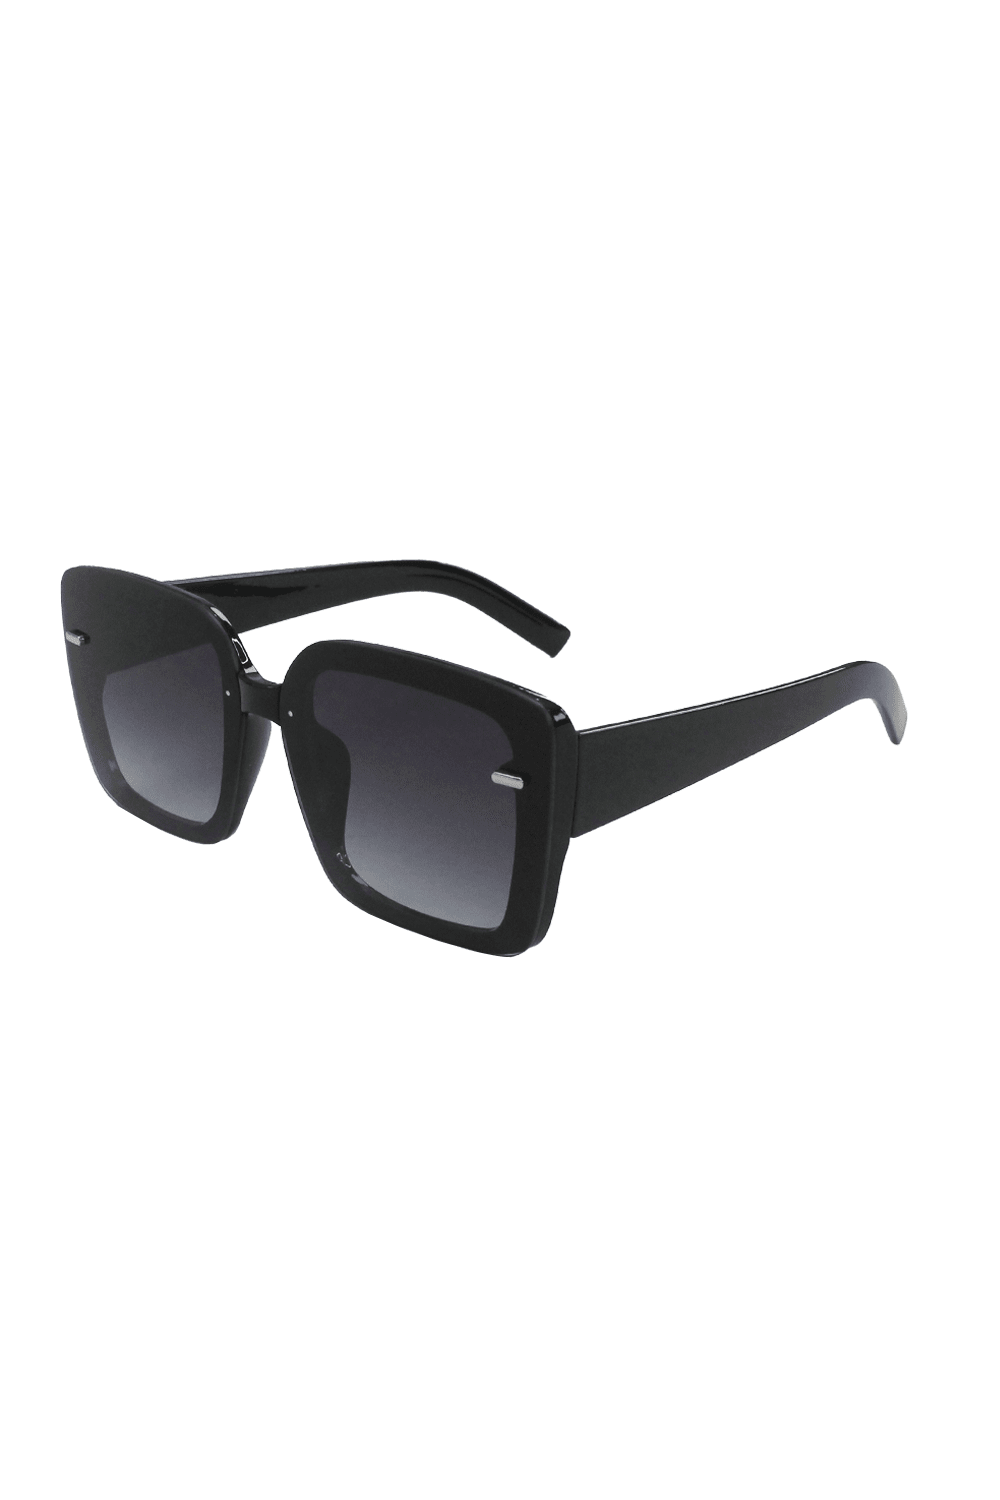 Emery Sunglasses Black sunglasses